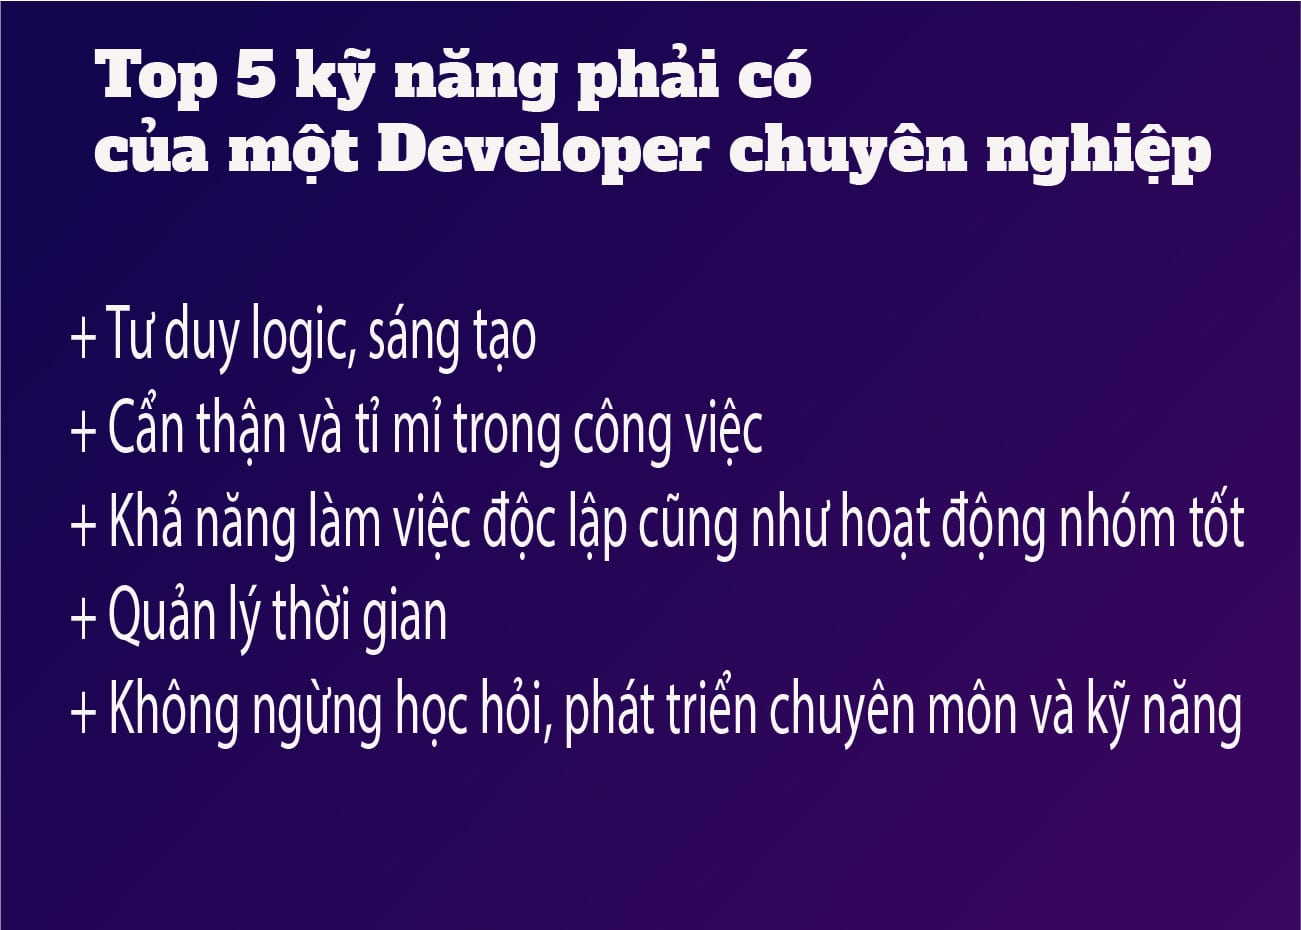 Developer, kỹ năng